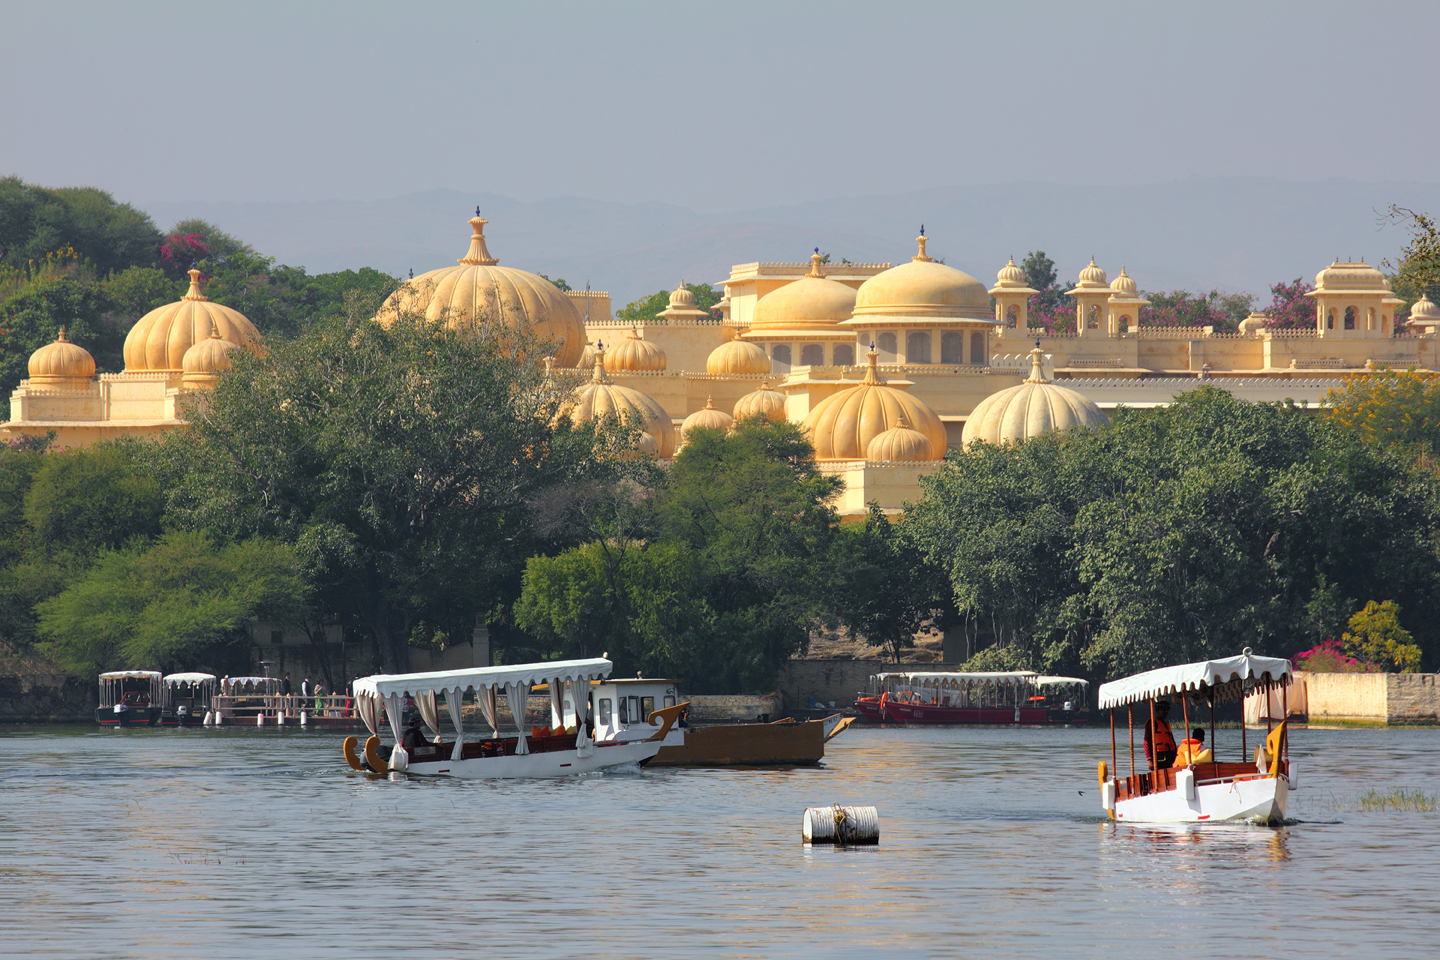 Boats and Palace on Pichola lake, Udaipur